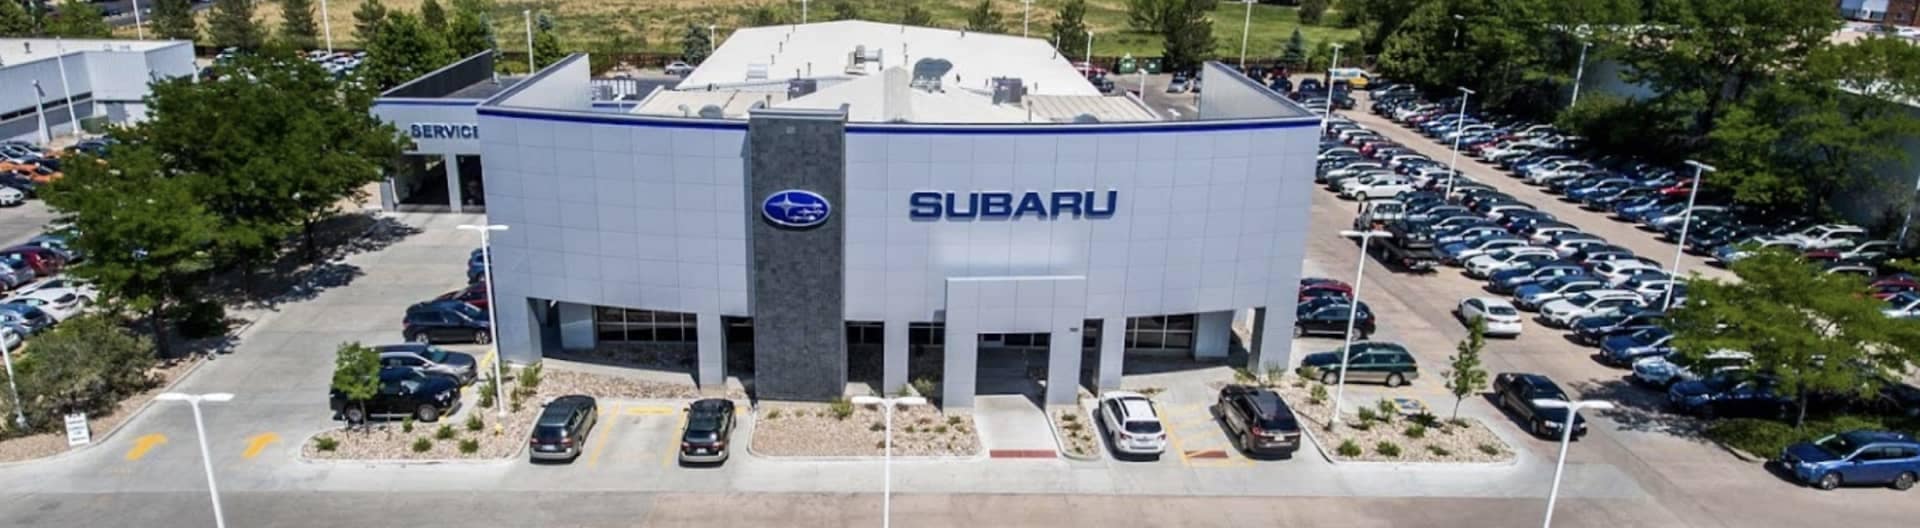 Schomp Subaru dealership image